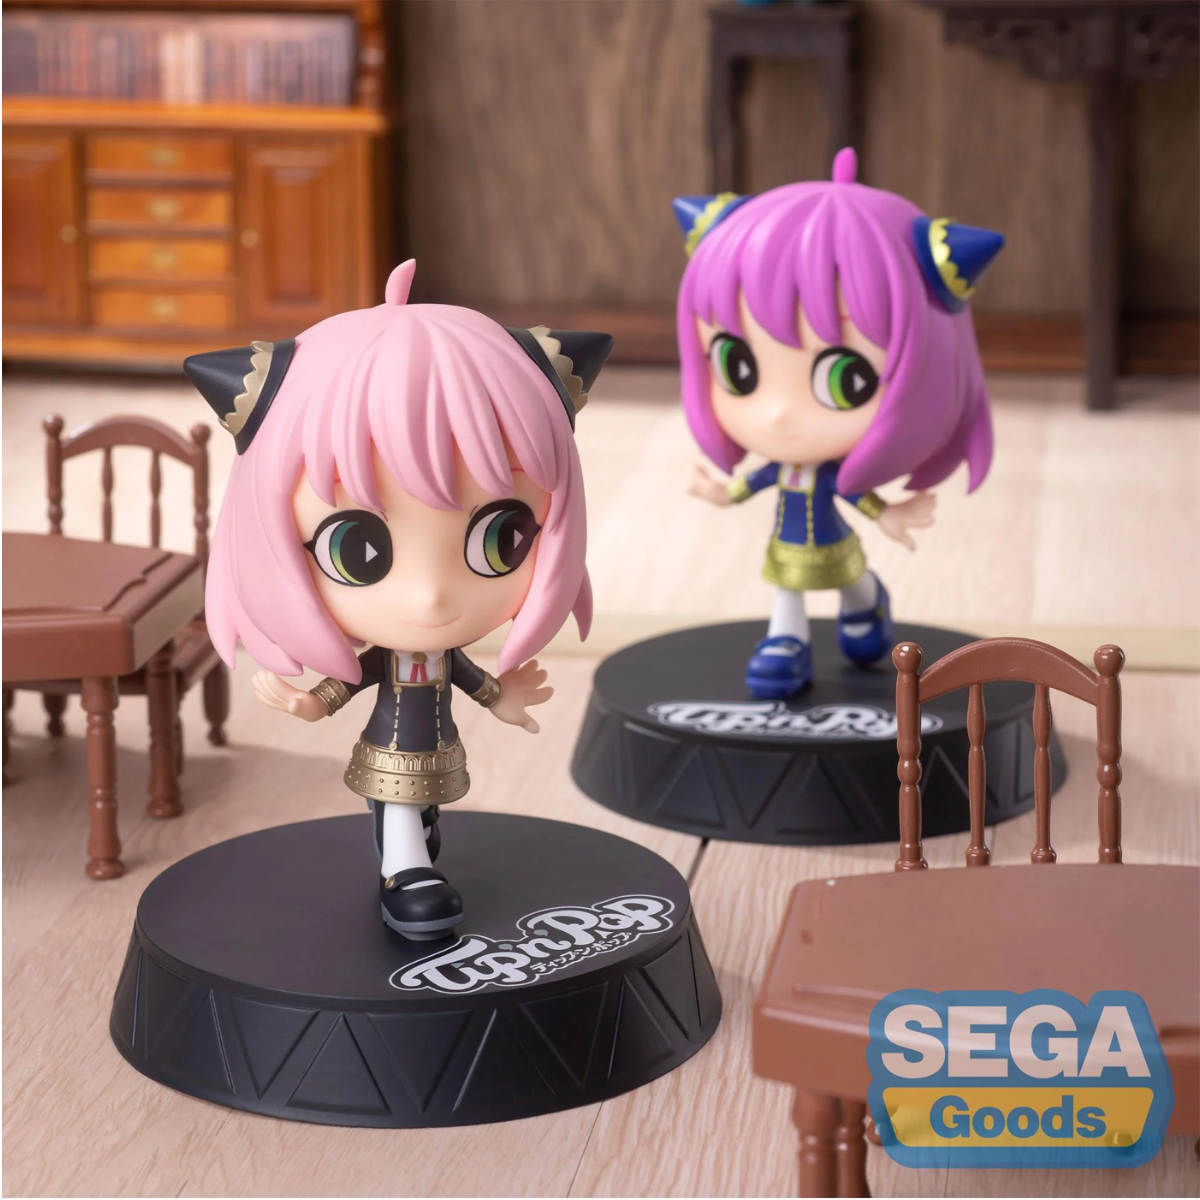 Figurine Sega SPY X FAMILY ANYA&BOND PM FIGURE